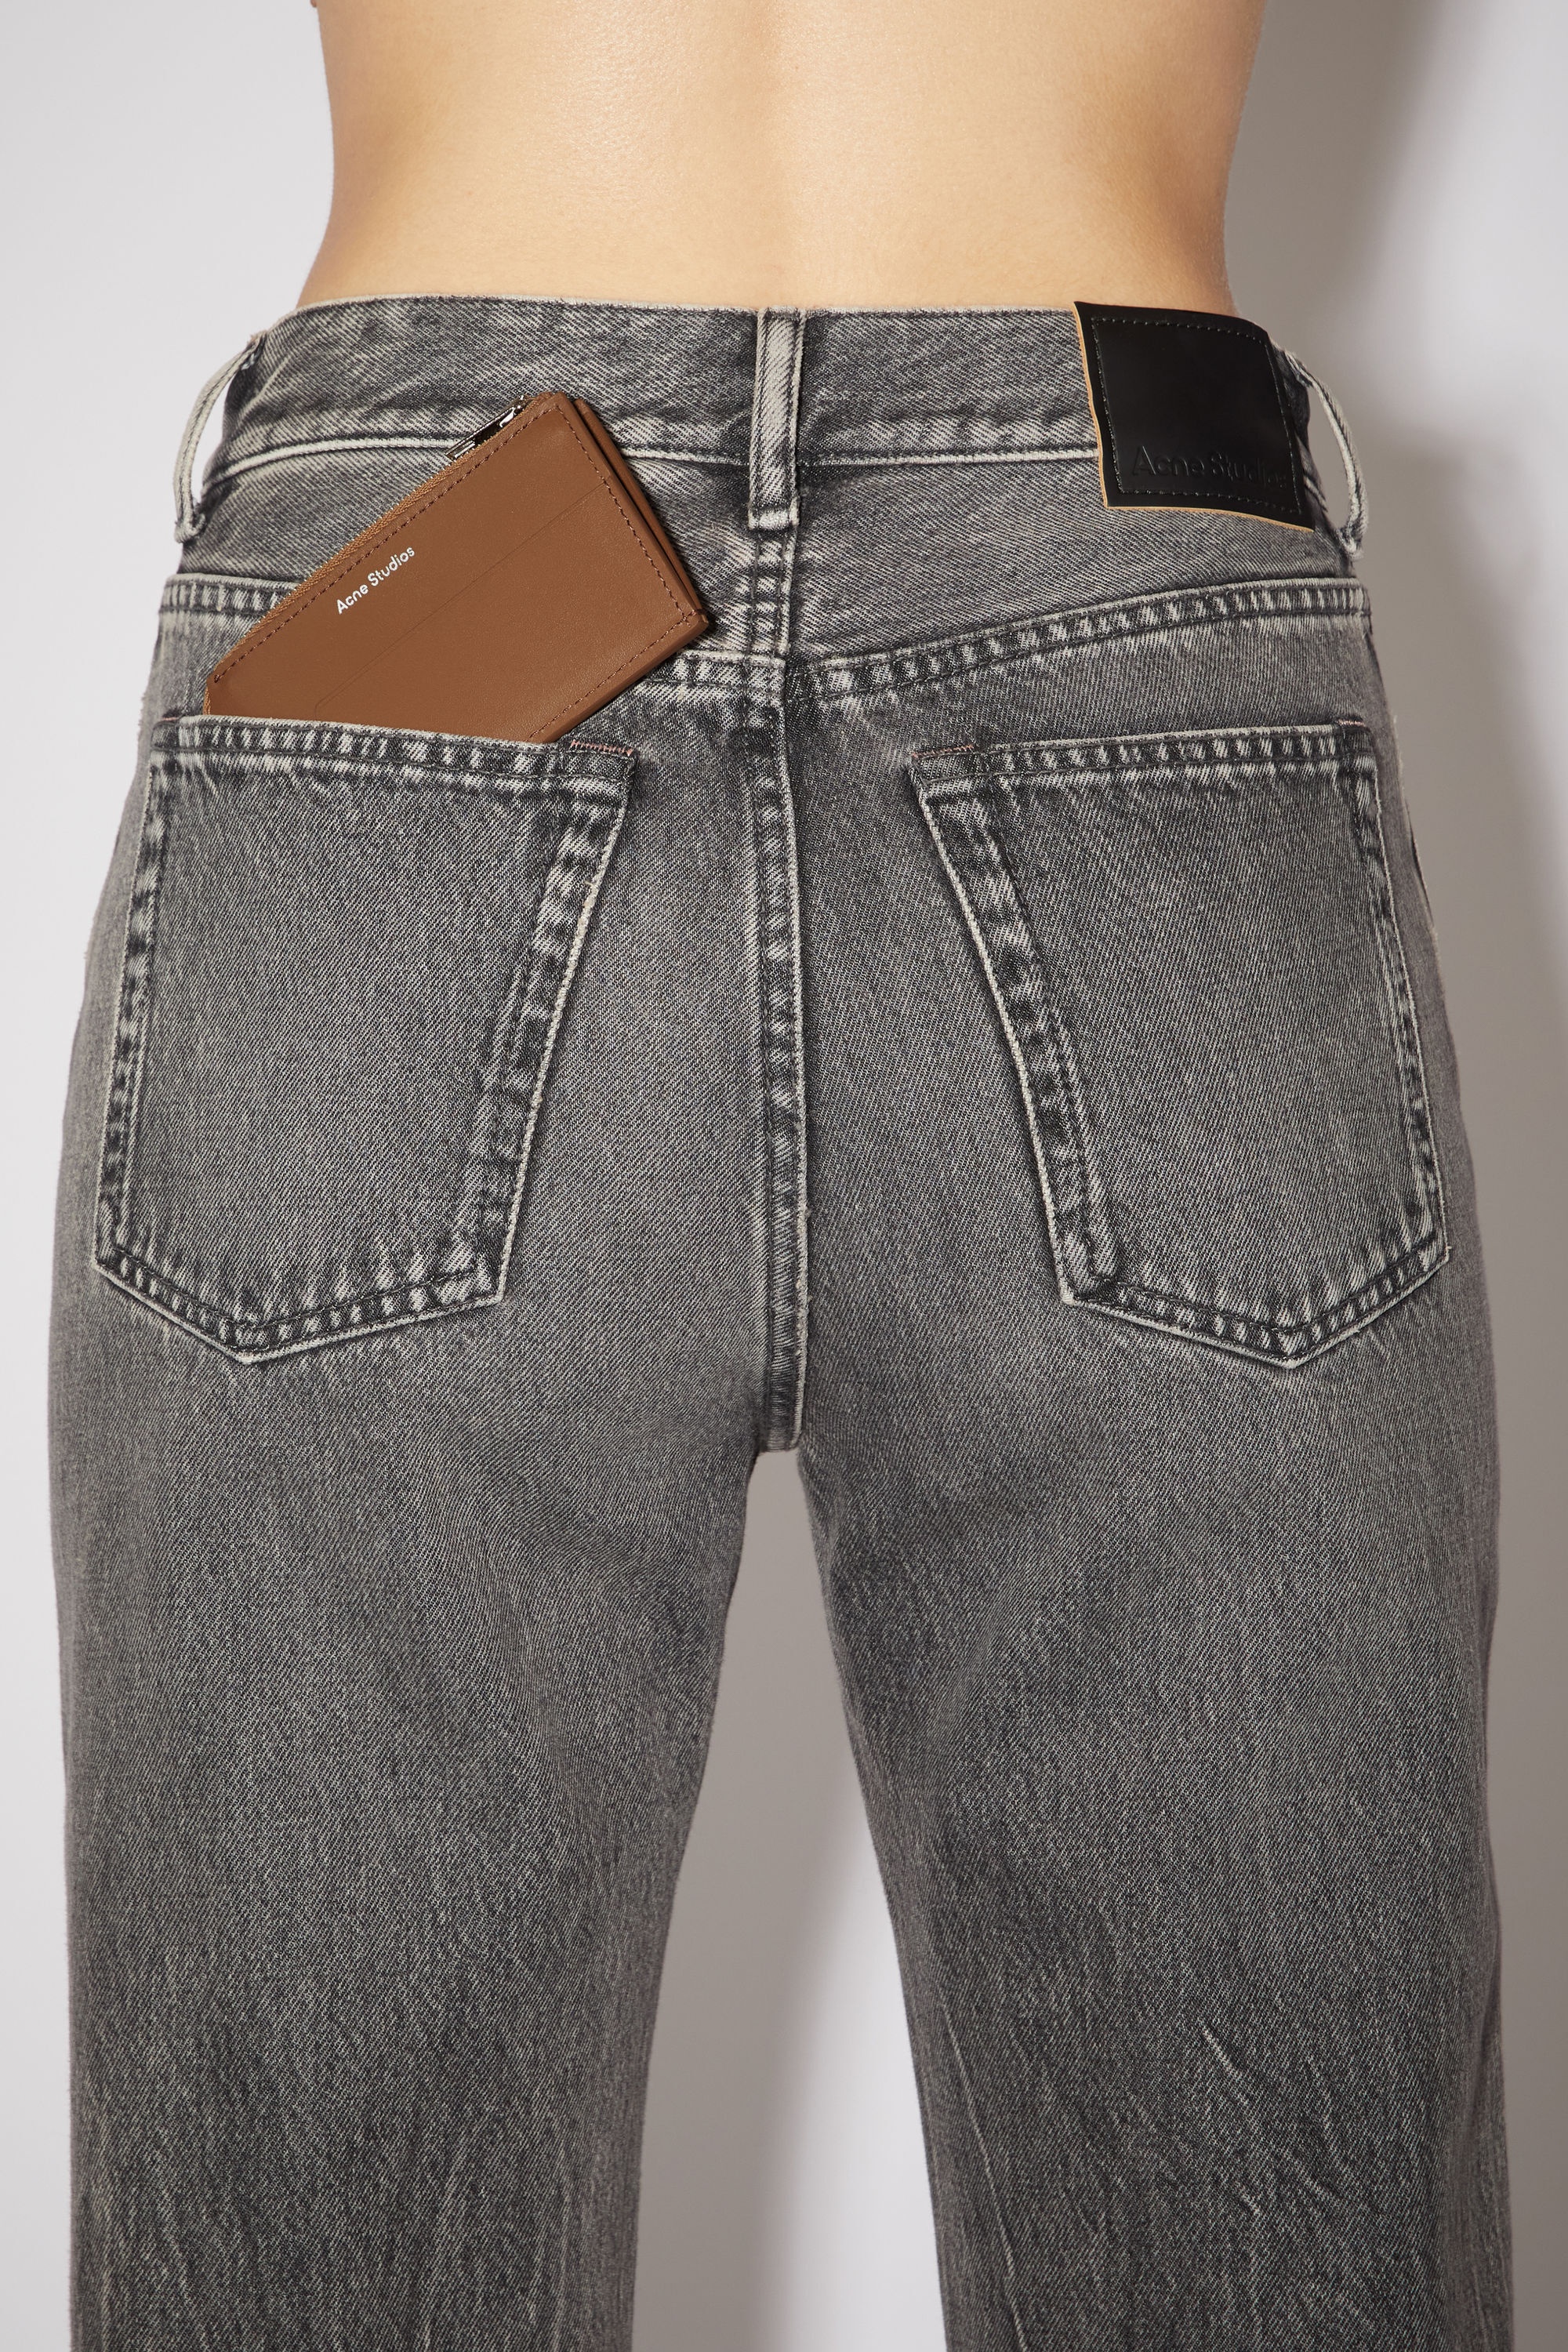 Leather zip wallet - Camel brown - 2